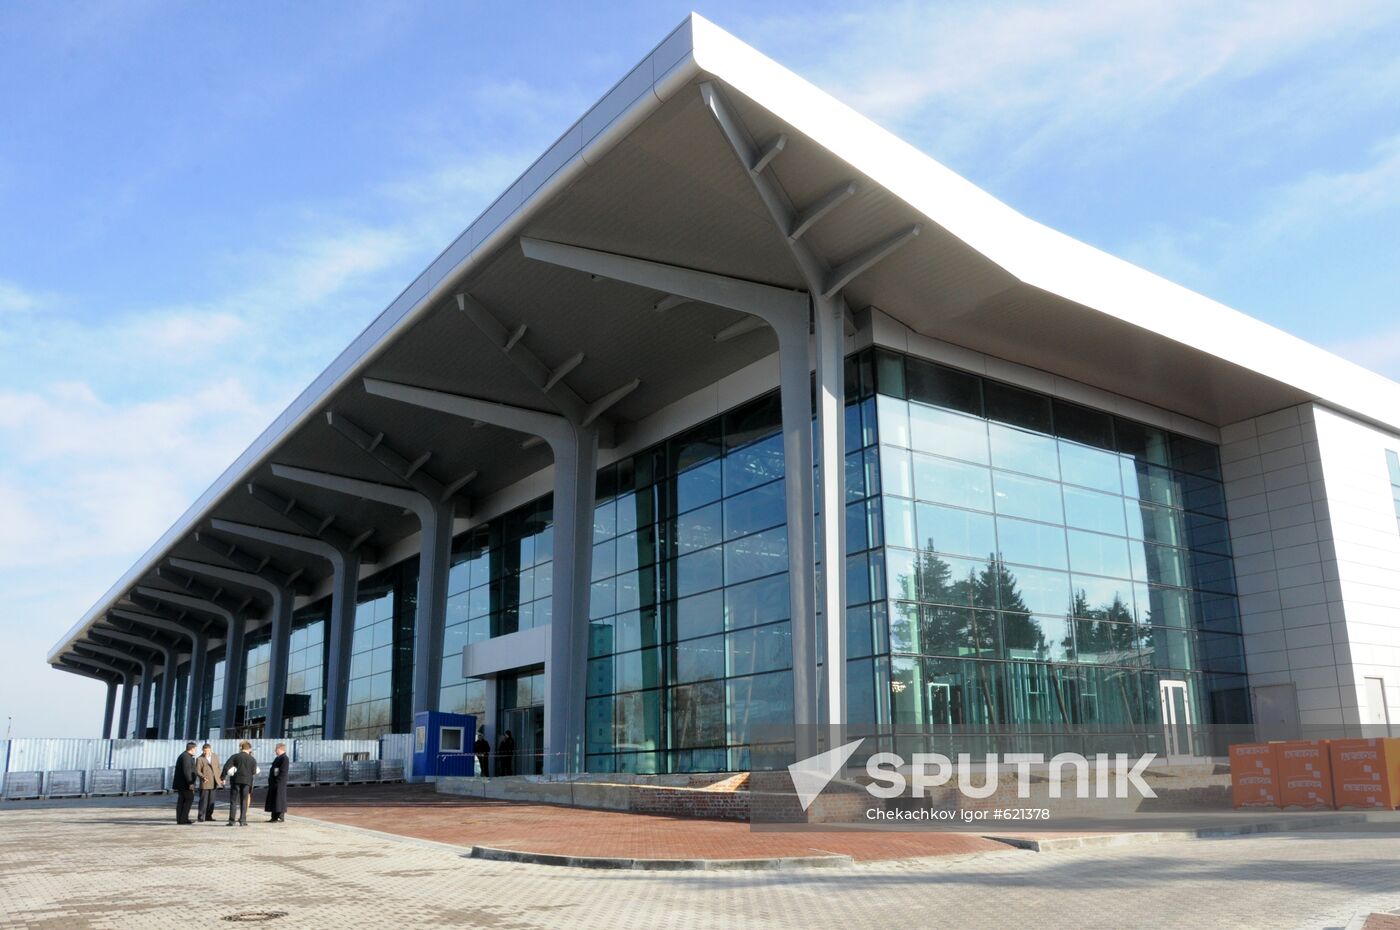 Kharkov's airport